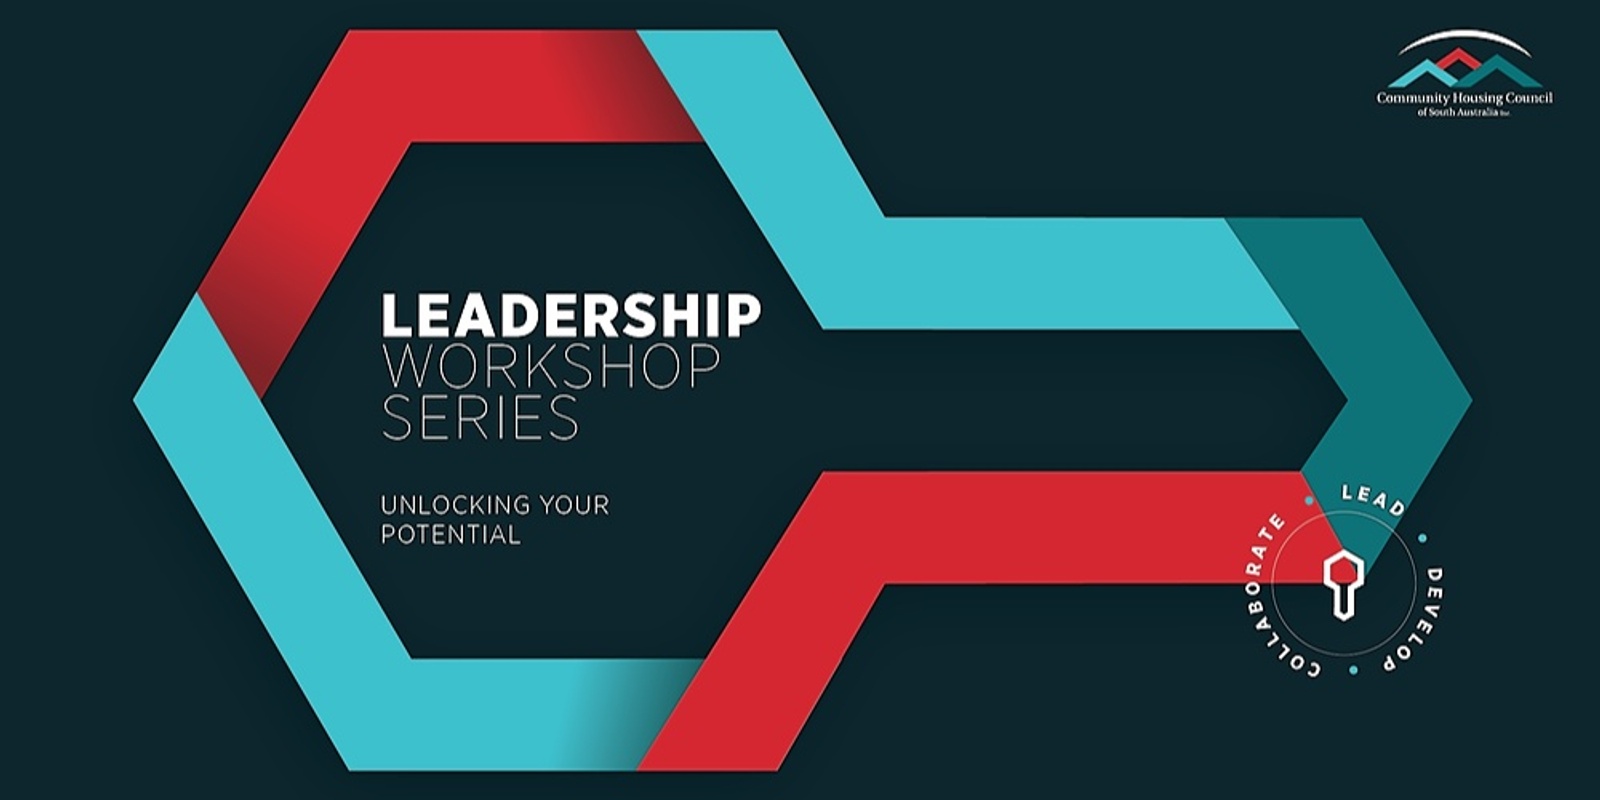 Banner image for CHCSA Leadership Series - Strategic Development and Asset Management